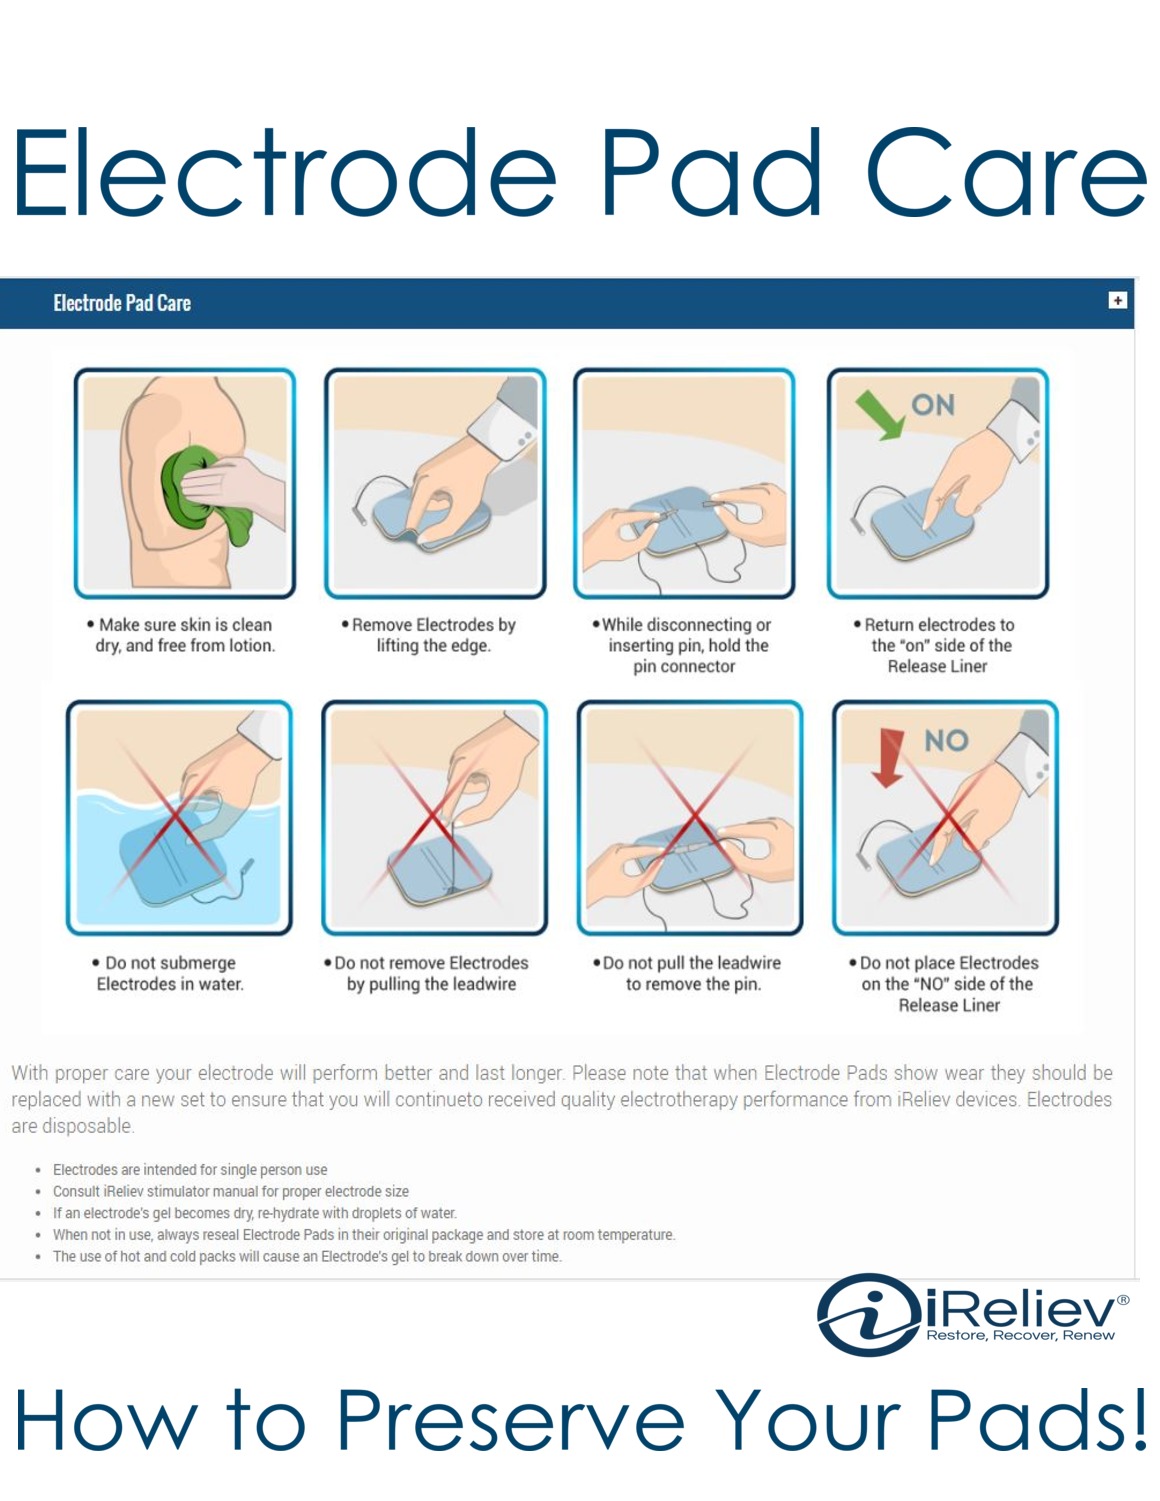 TENS Unit Electrode Placement Guide 